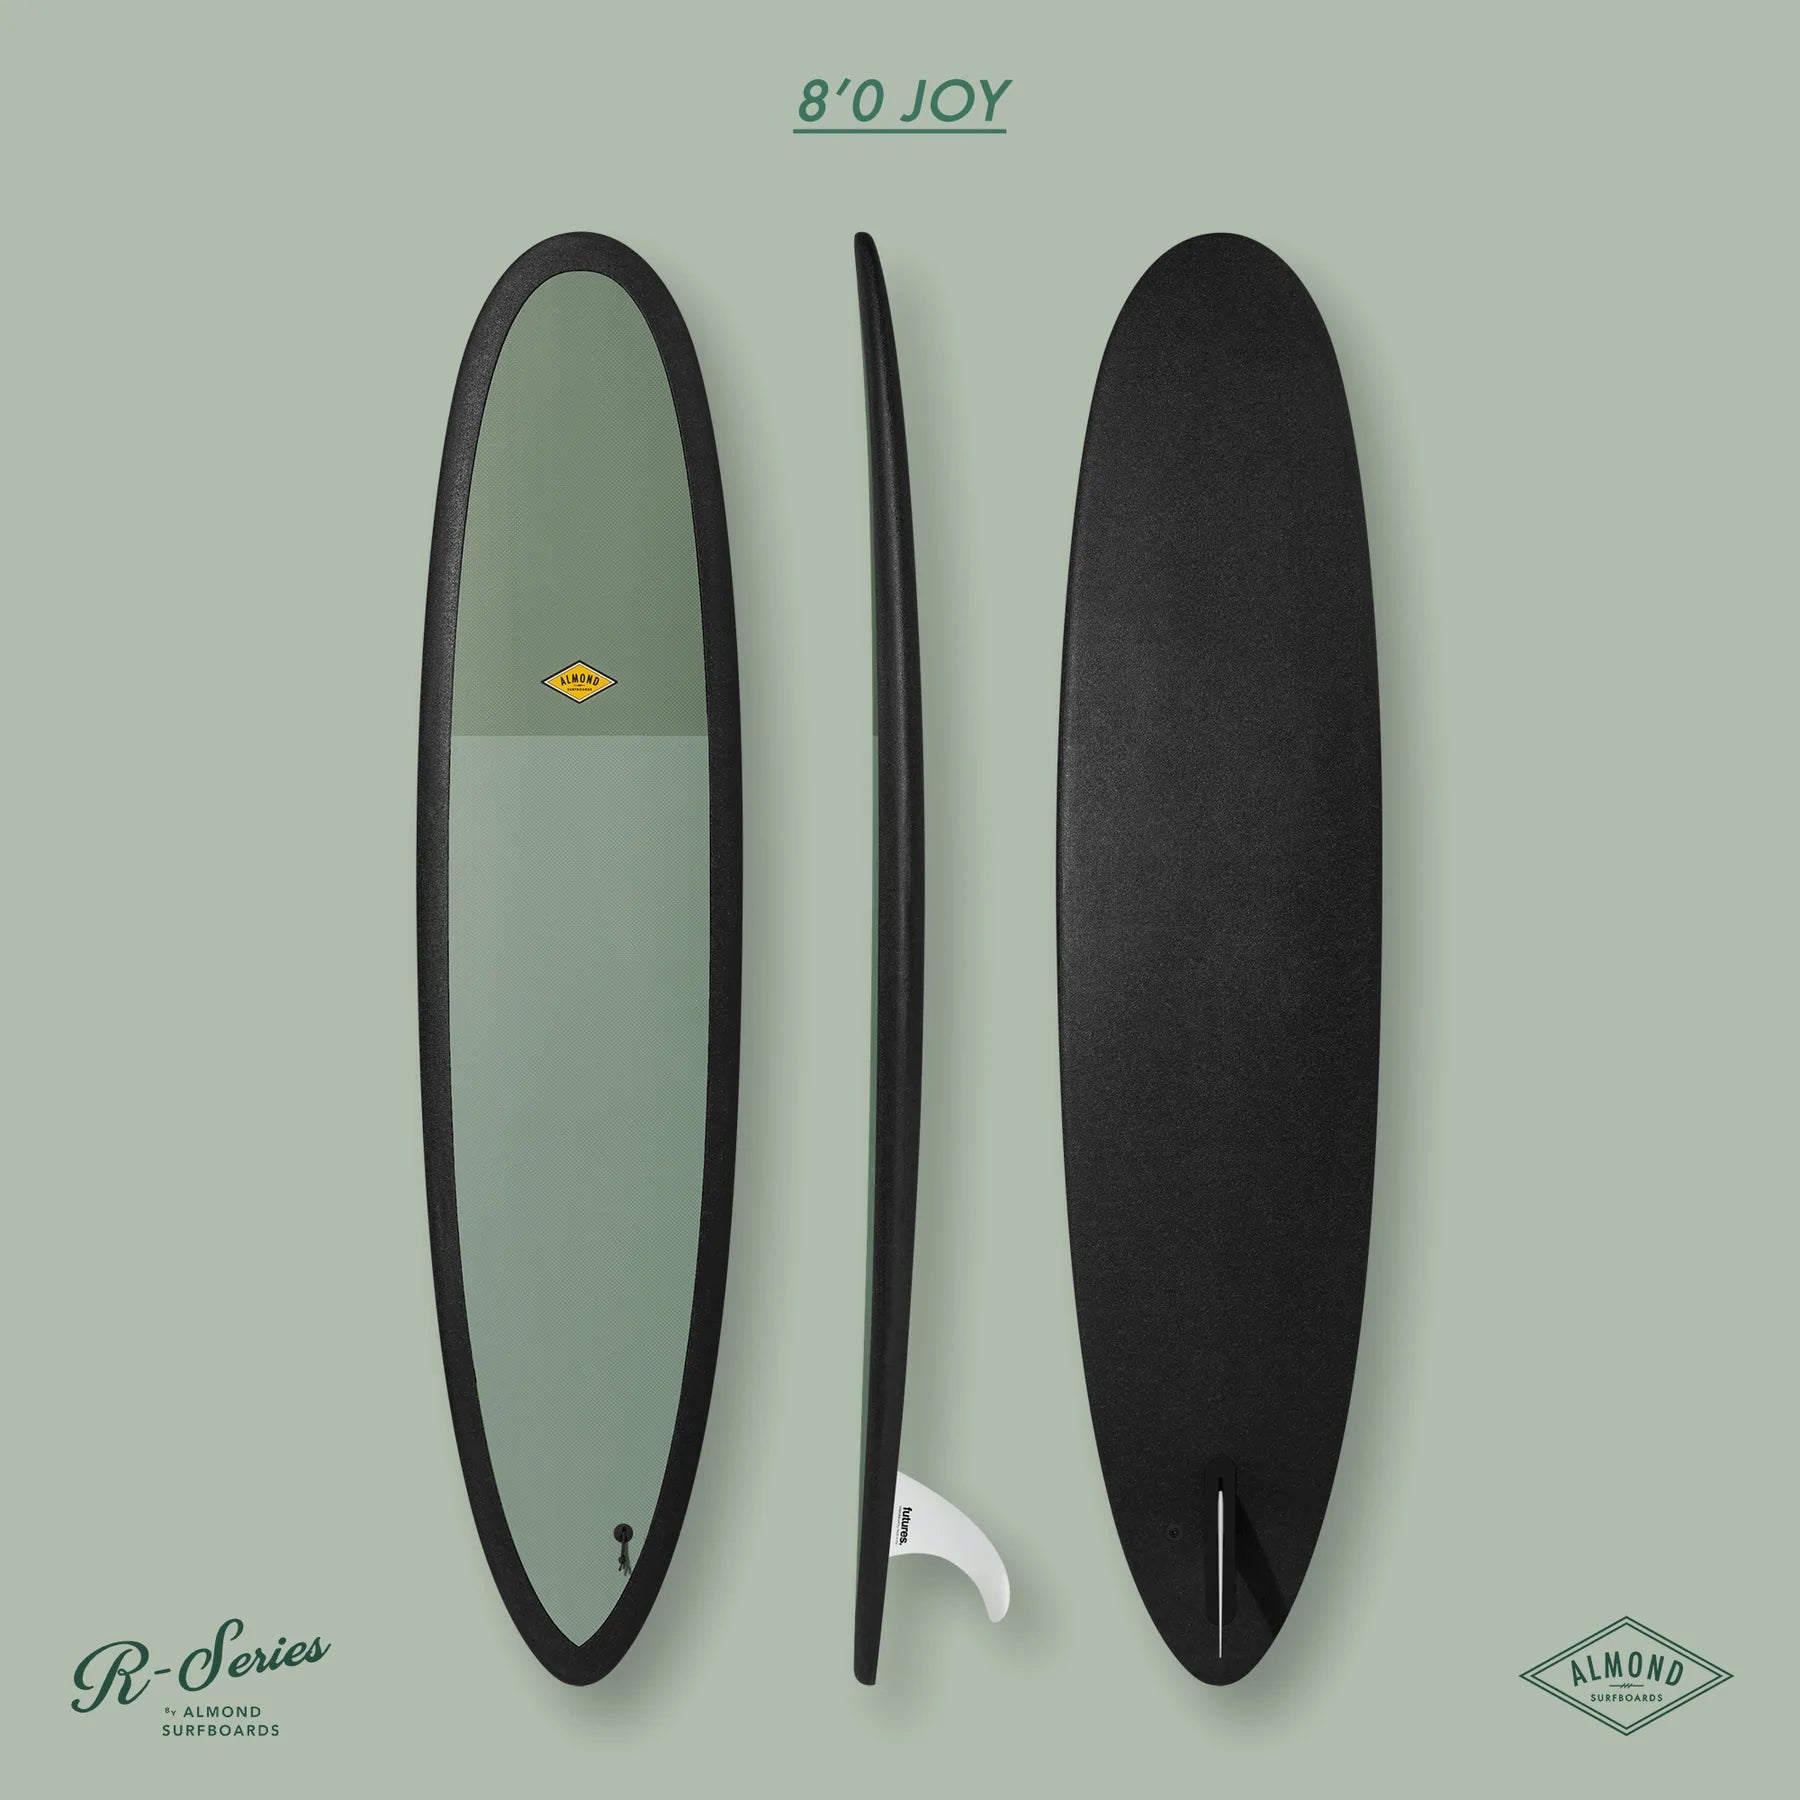 ALMOND Surfboards - R-Series Joy 8' - Sage